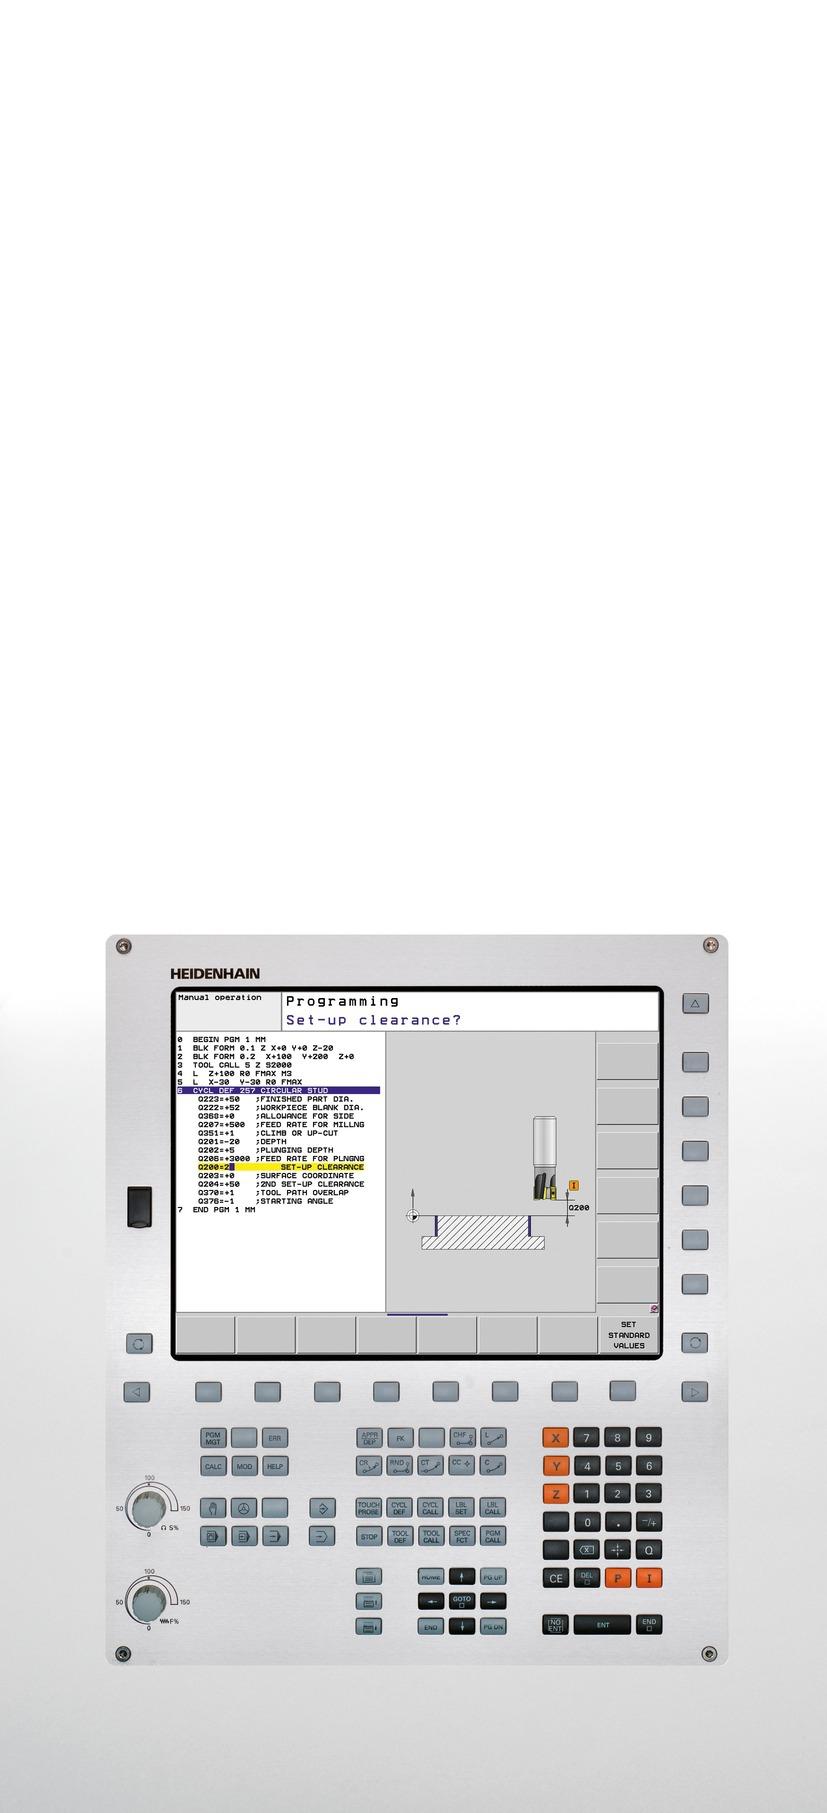 TNC 620 Bruger-håndbog Cyklusprogrammering